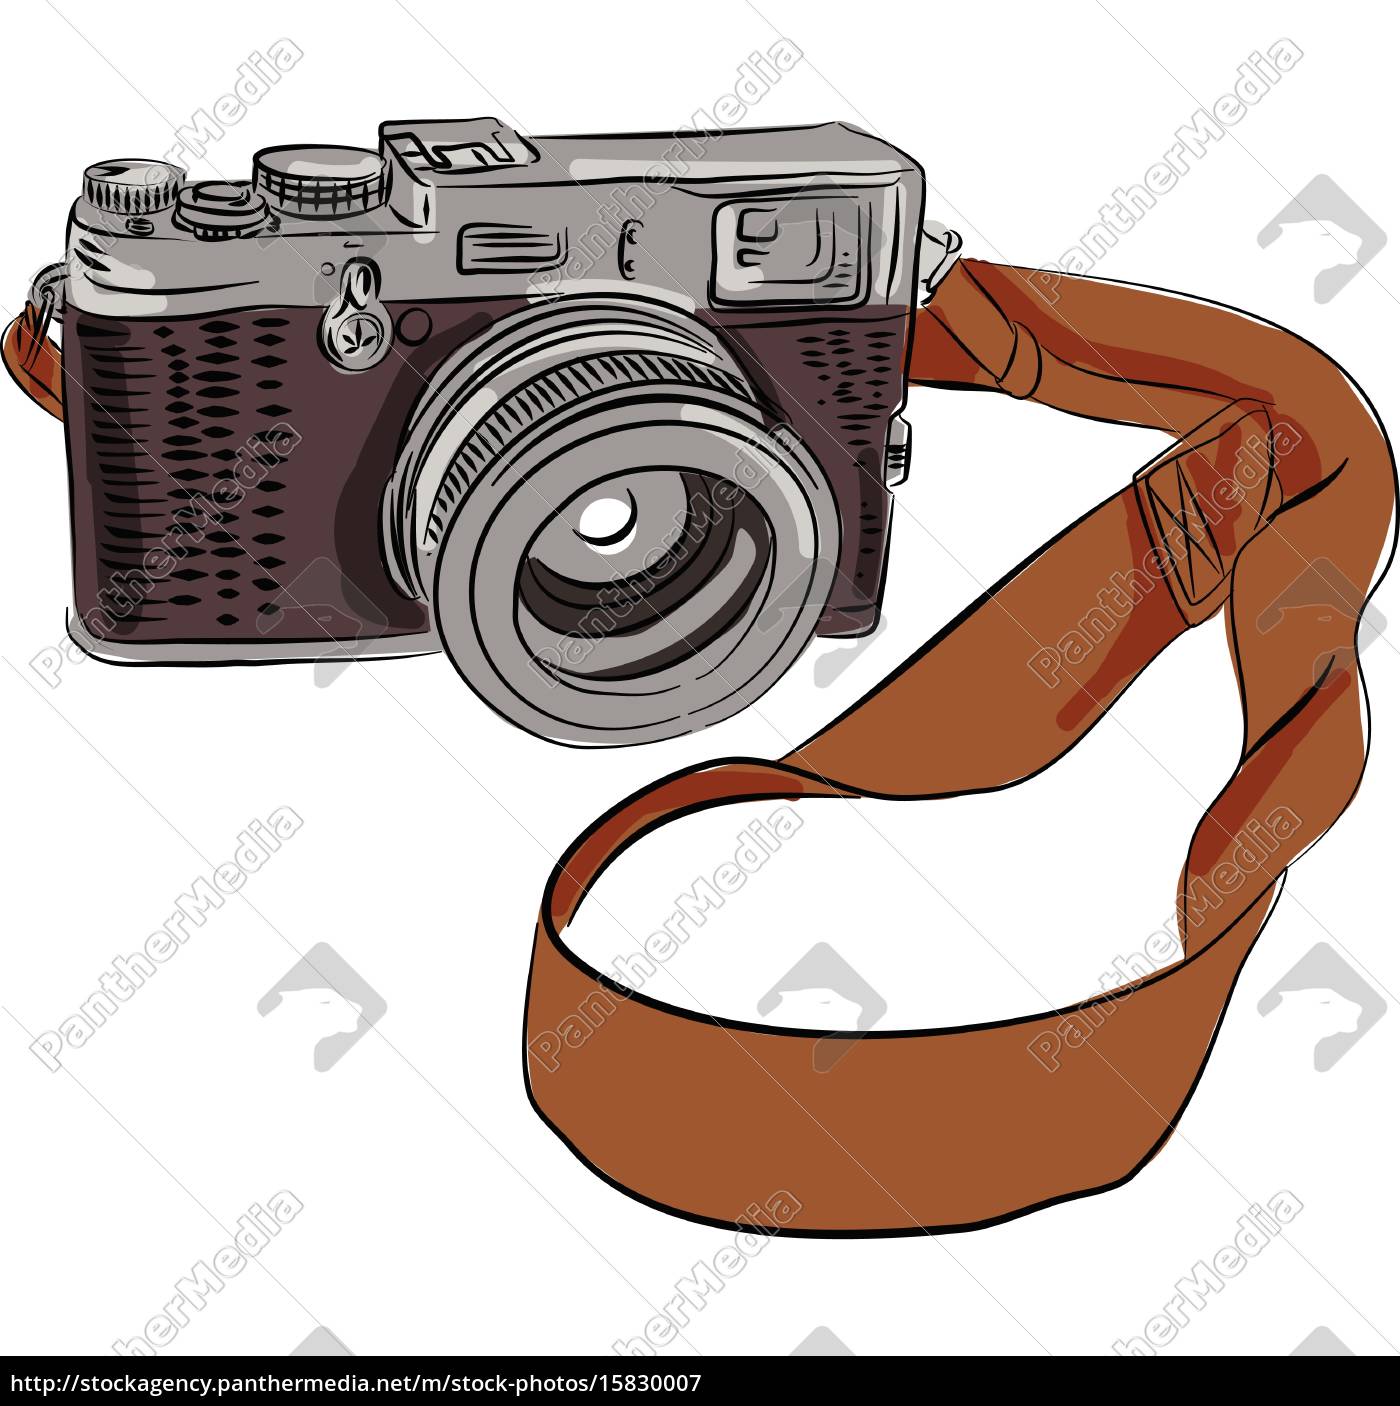 vintage cámara dibujo aislado - Stockphoto #15830007 | Agencia de stock